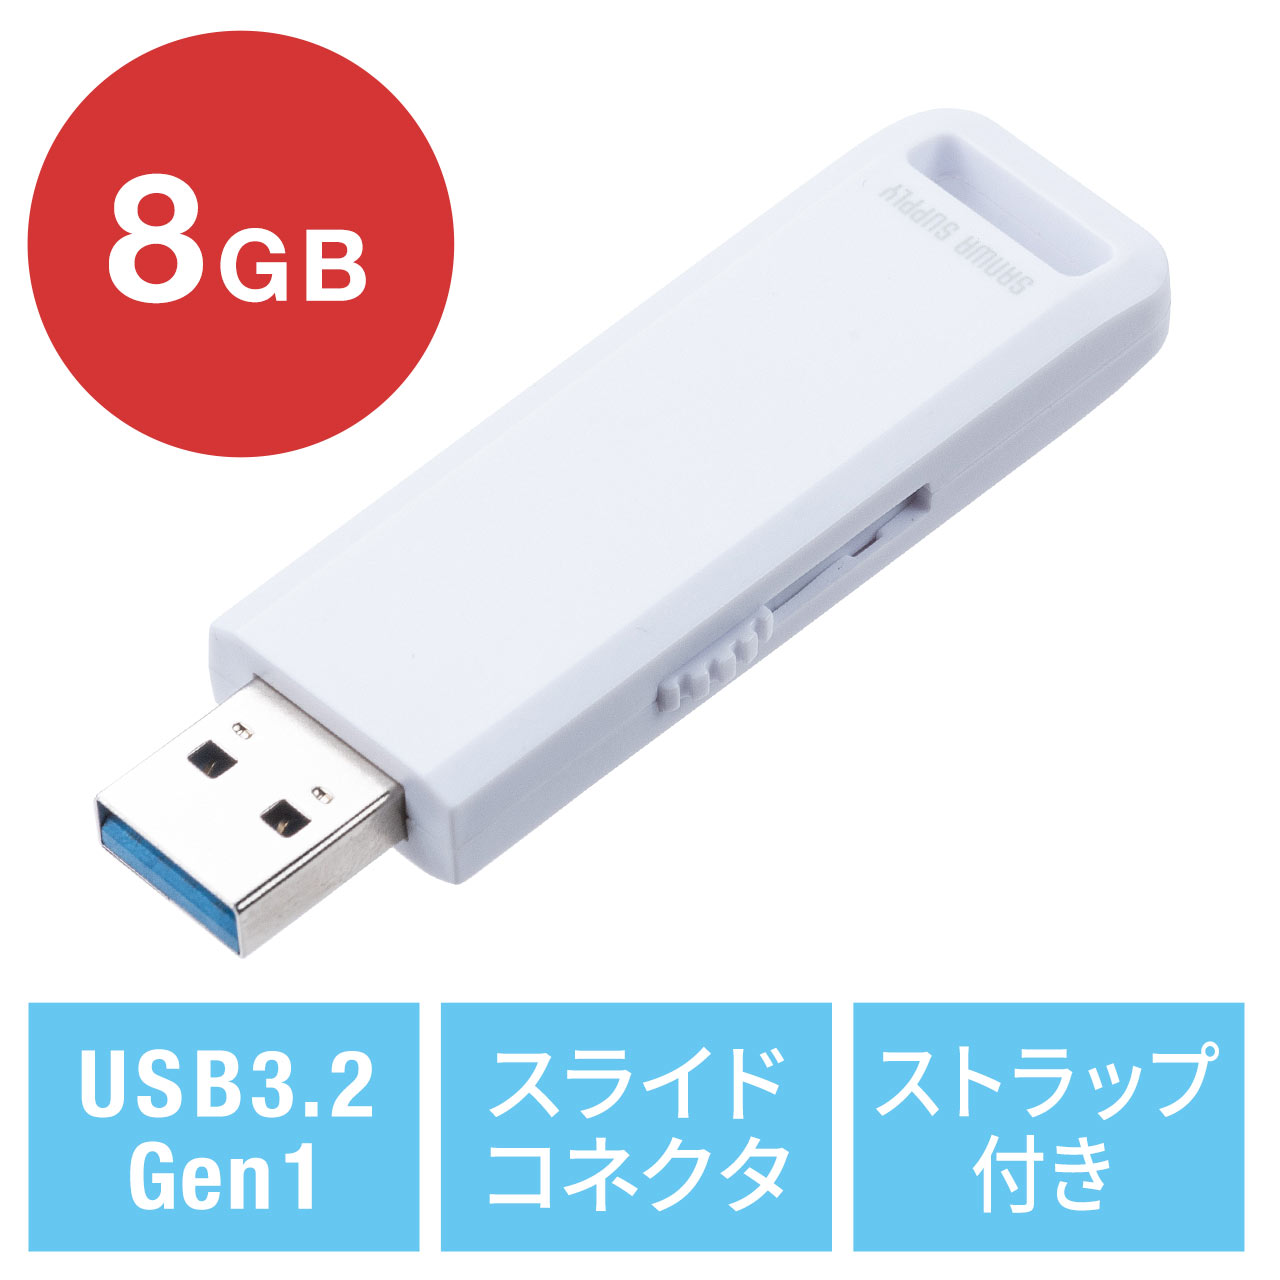 USBif[^]EXChE8GBEUSB3.2 Gen1EzCgEANZXvj 600-3USL8GW